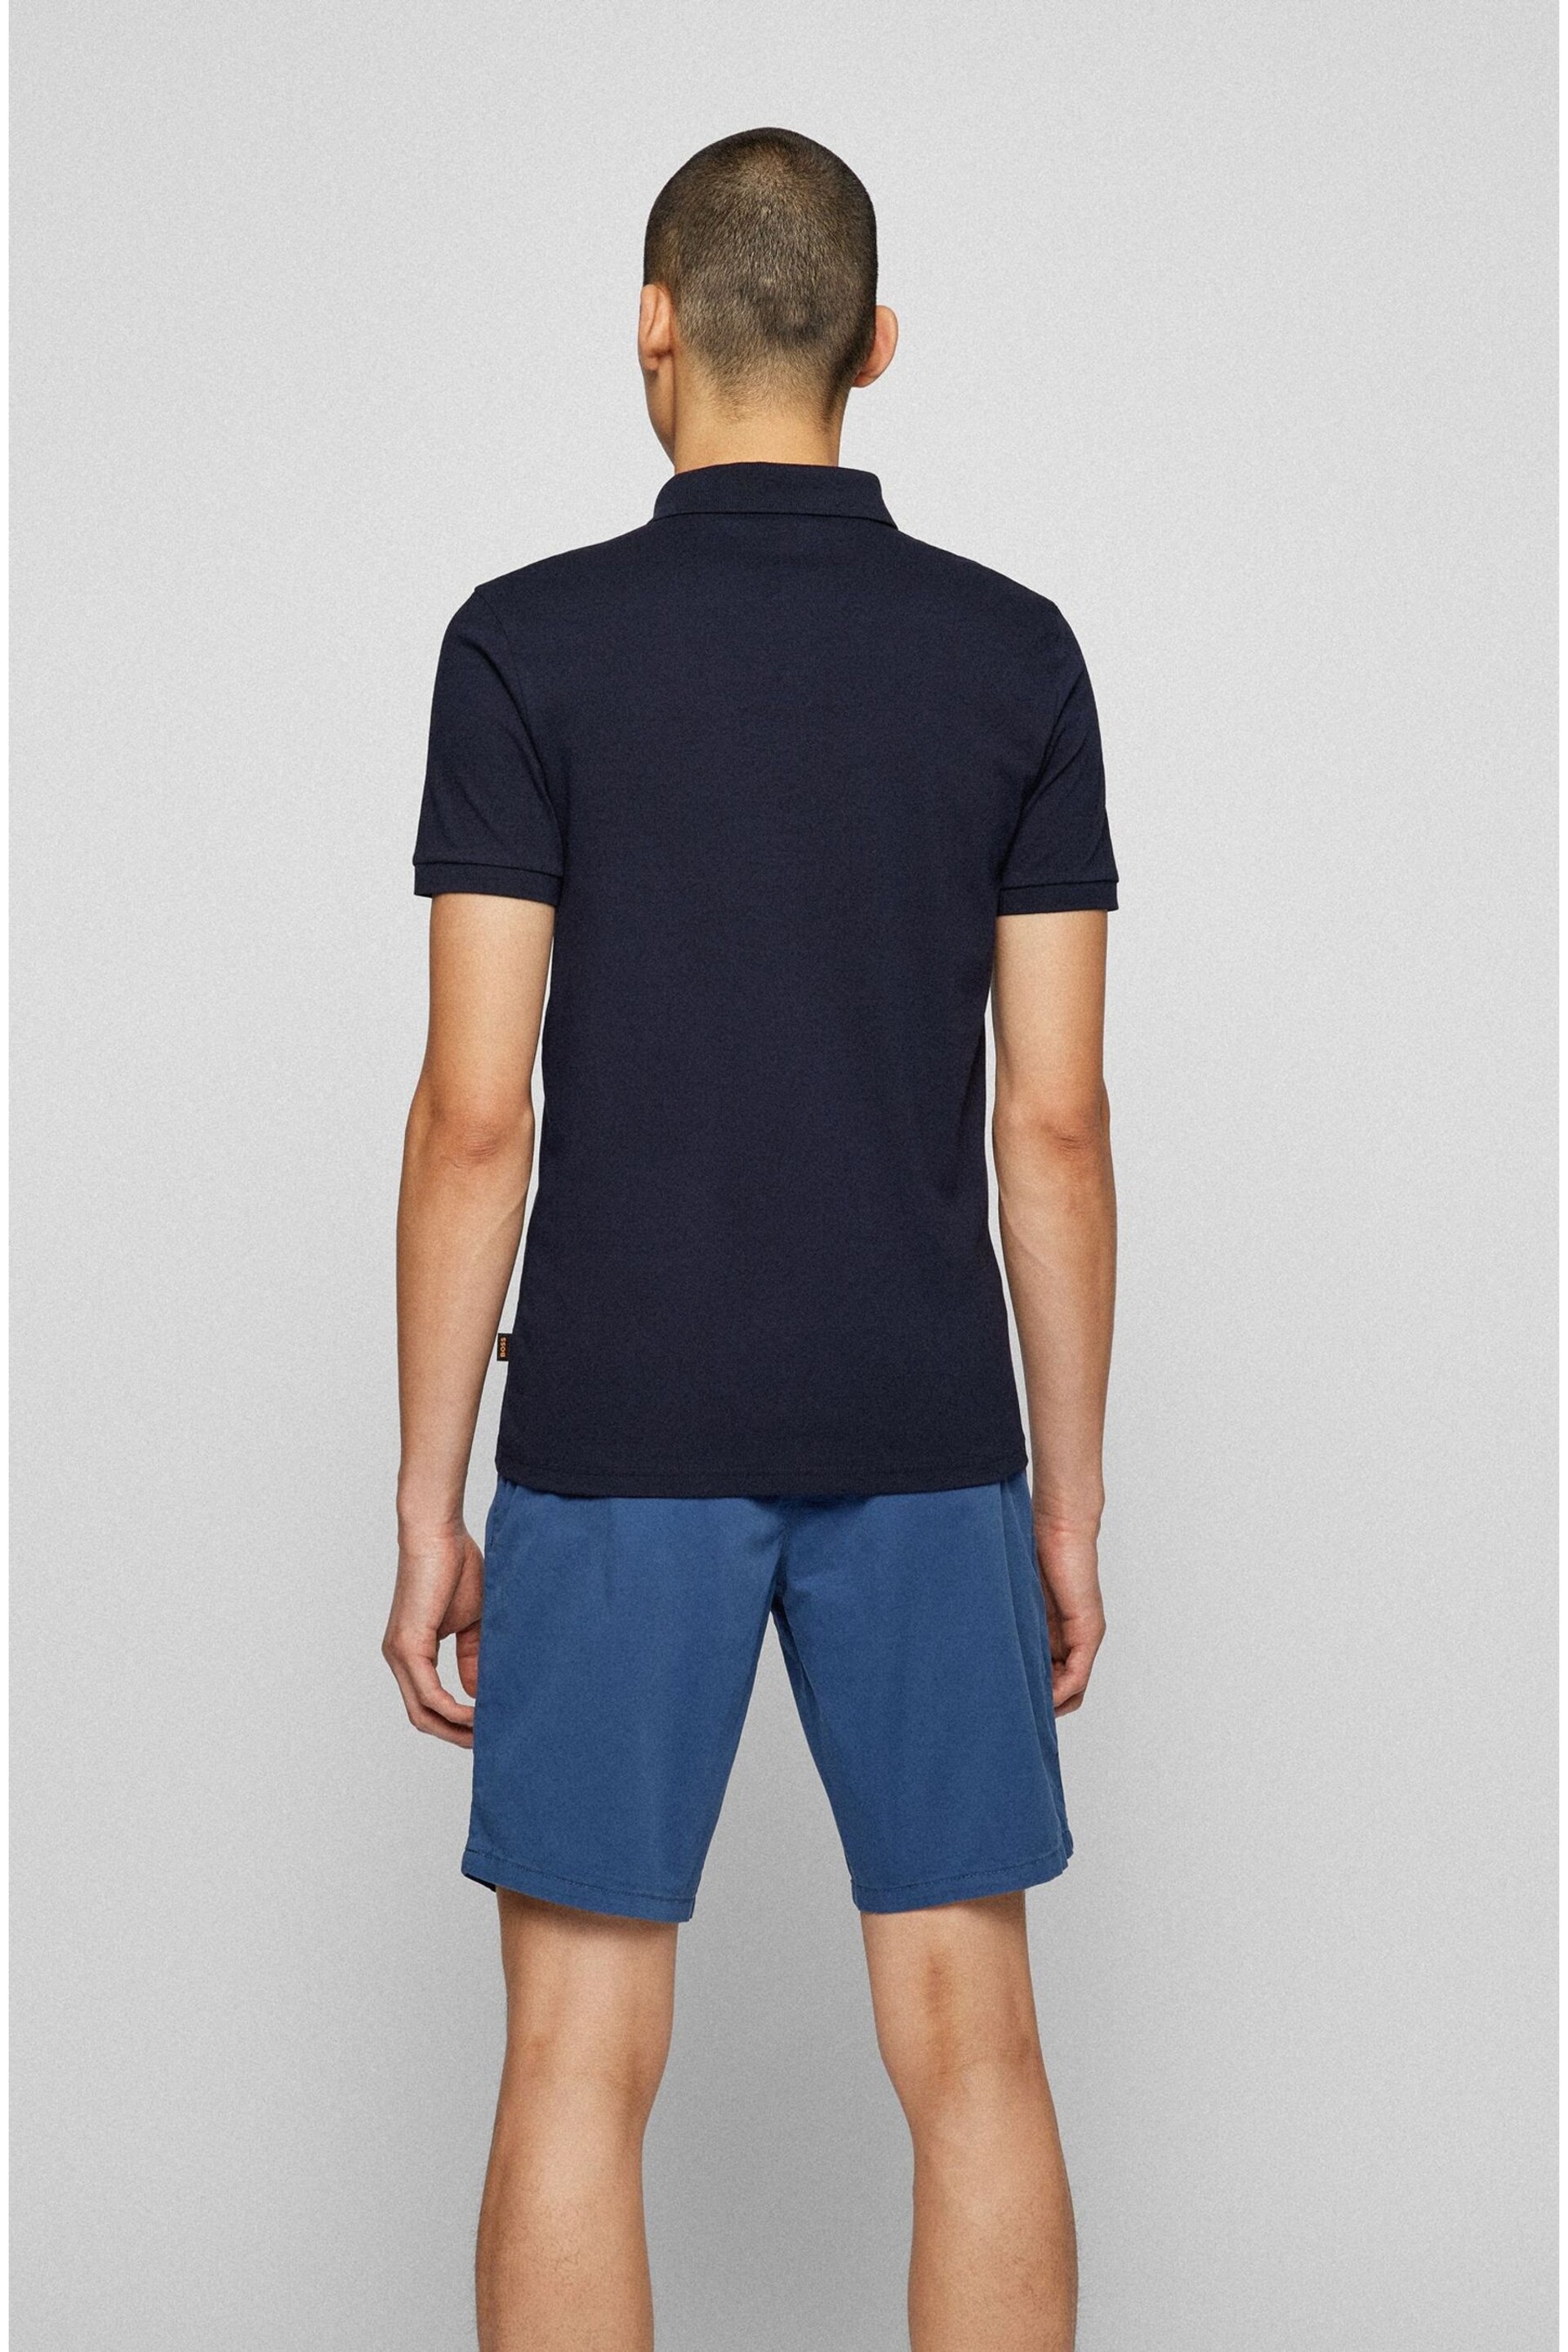 BOSS Navy Blue Passenger Polo Shirt - Image 2 of 5